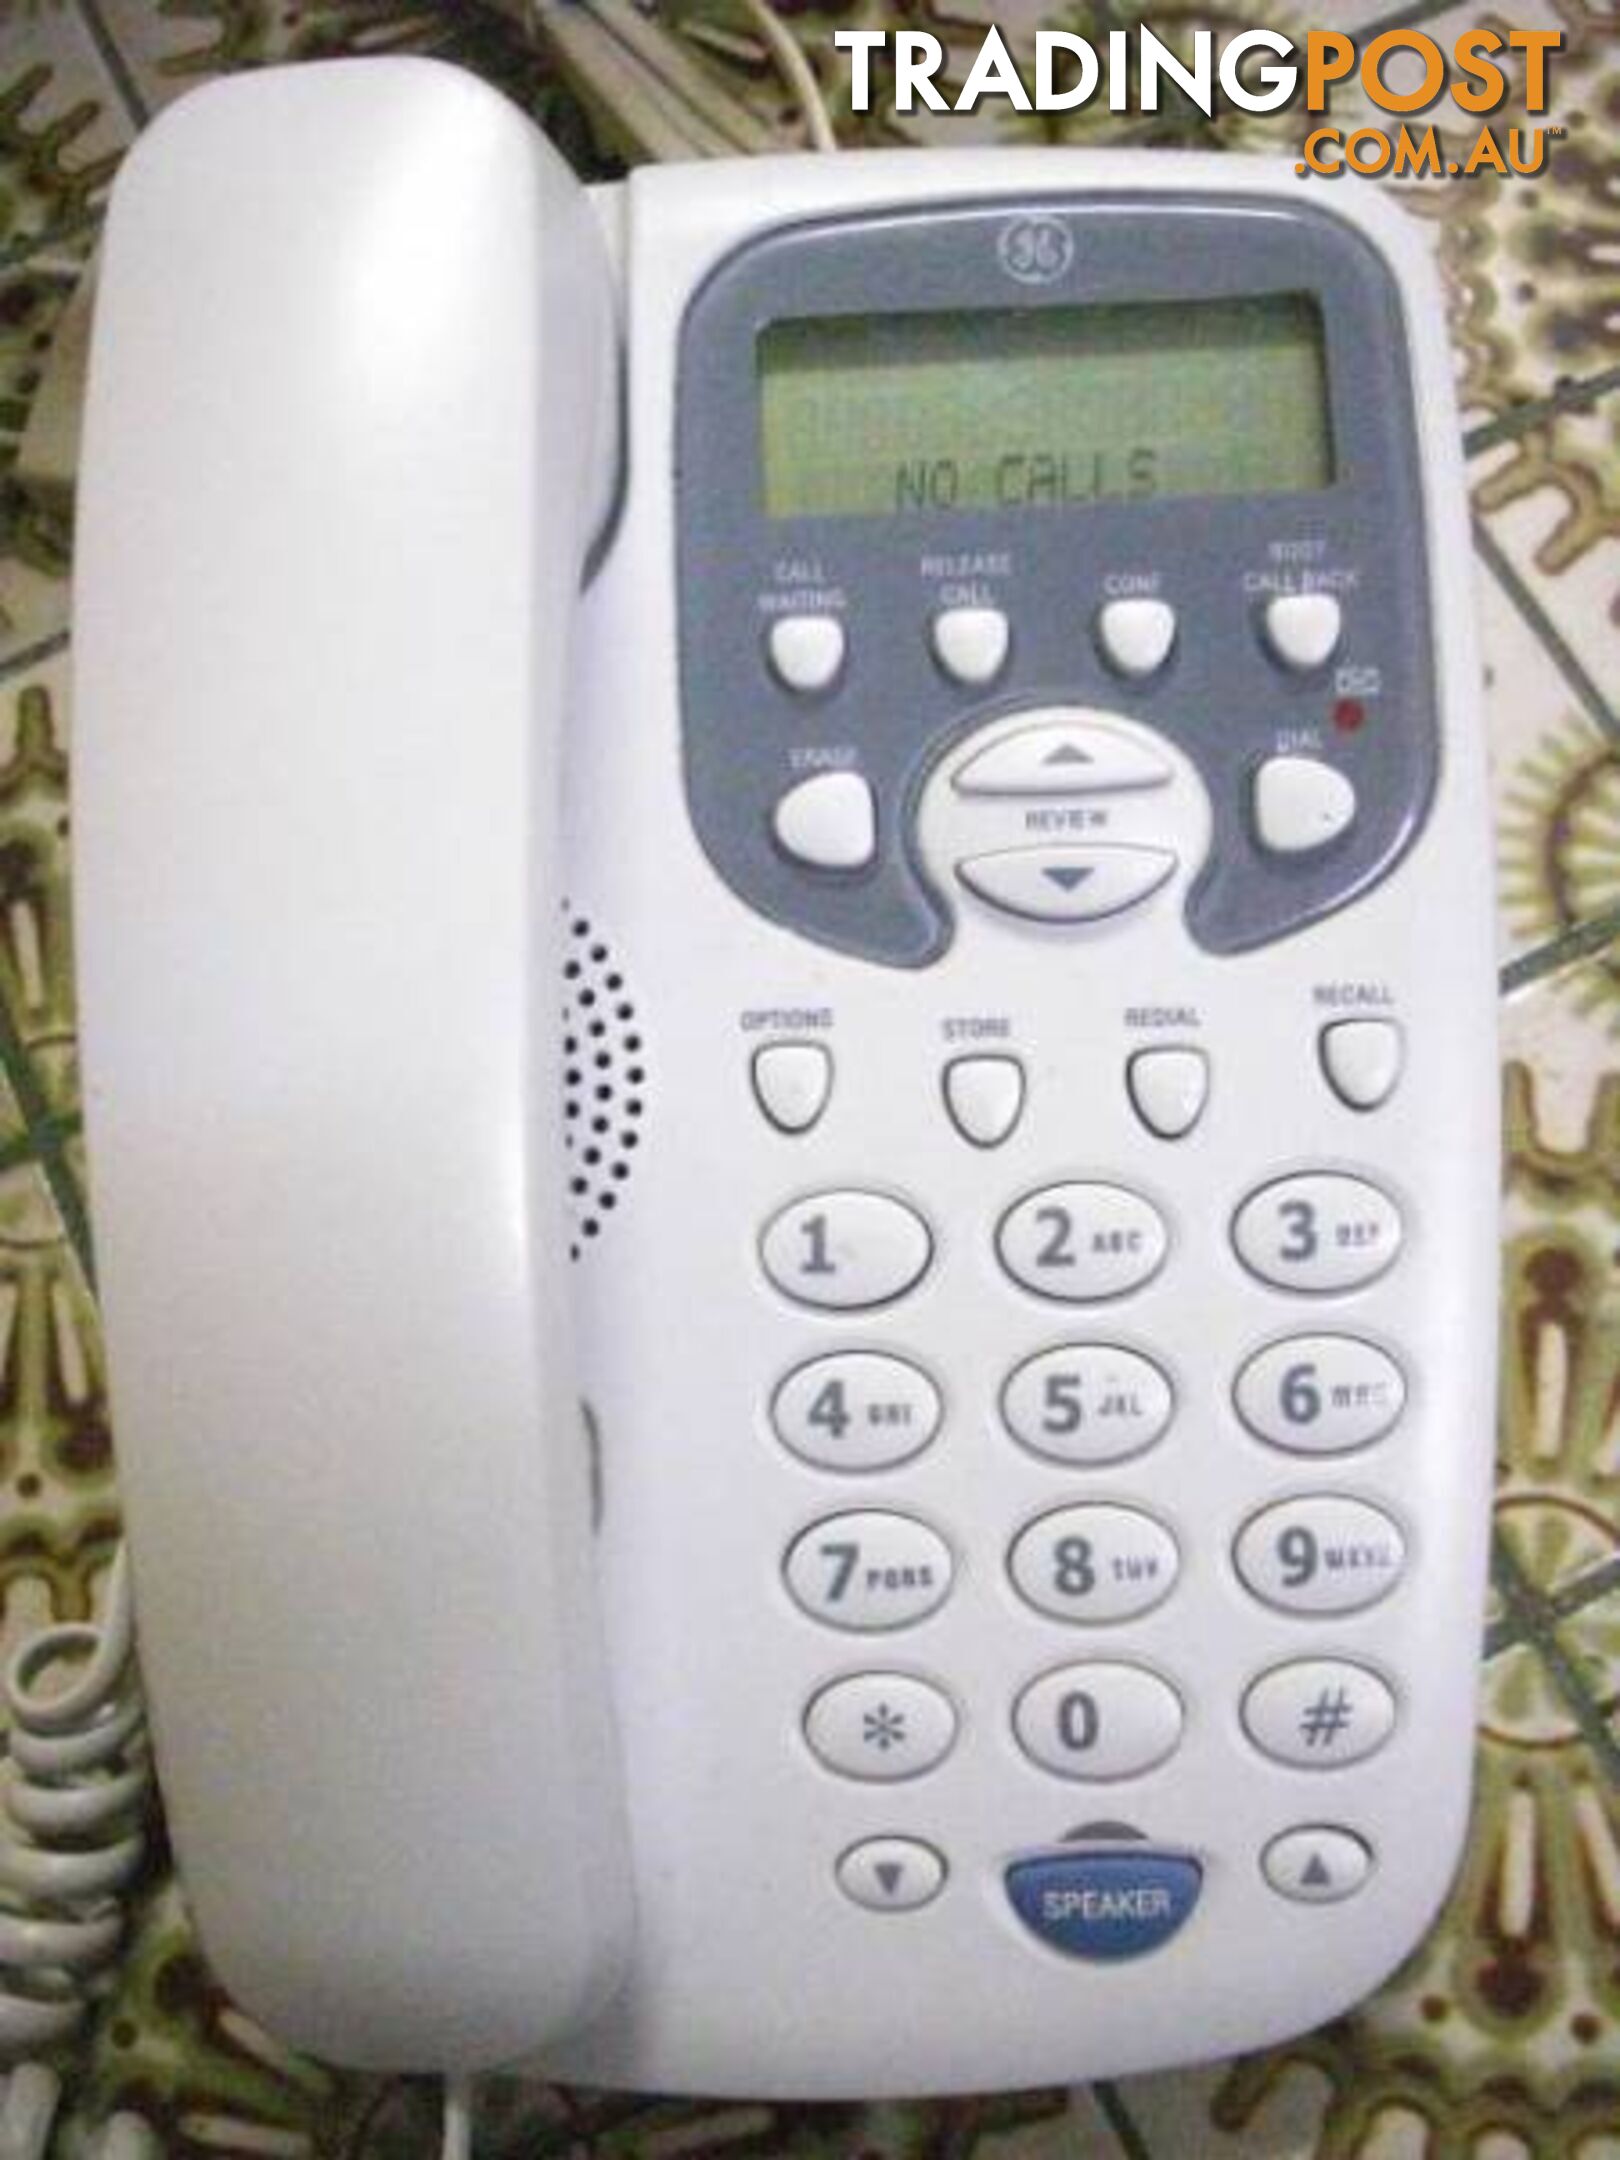 GE SPEAKER PHONE WITH CALL WAITING & CALL I.D